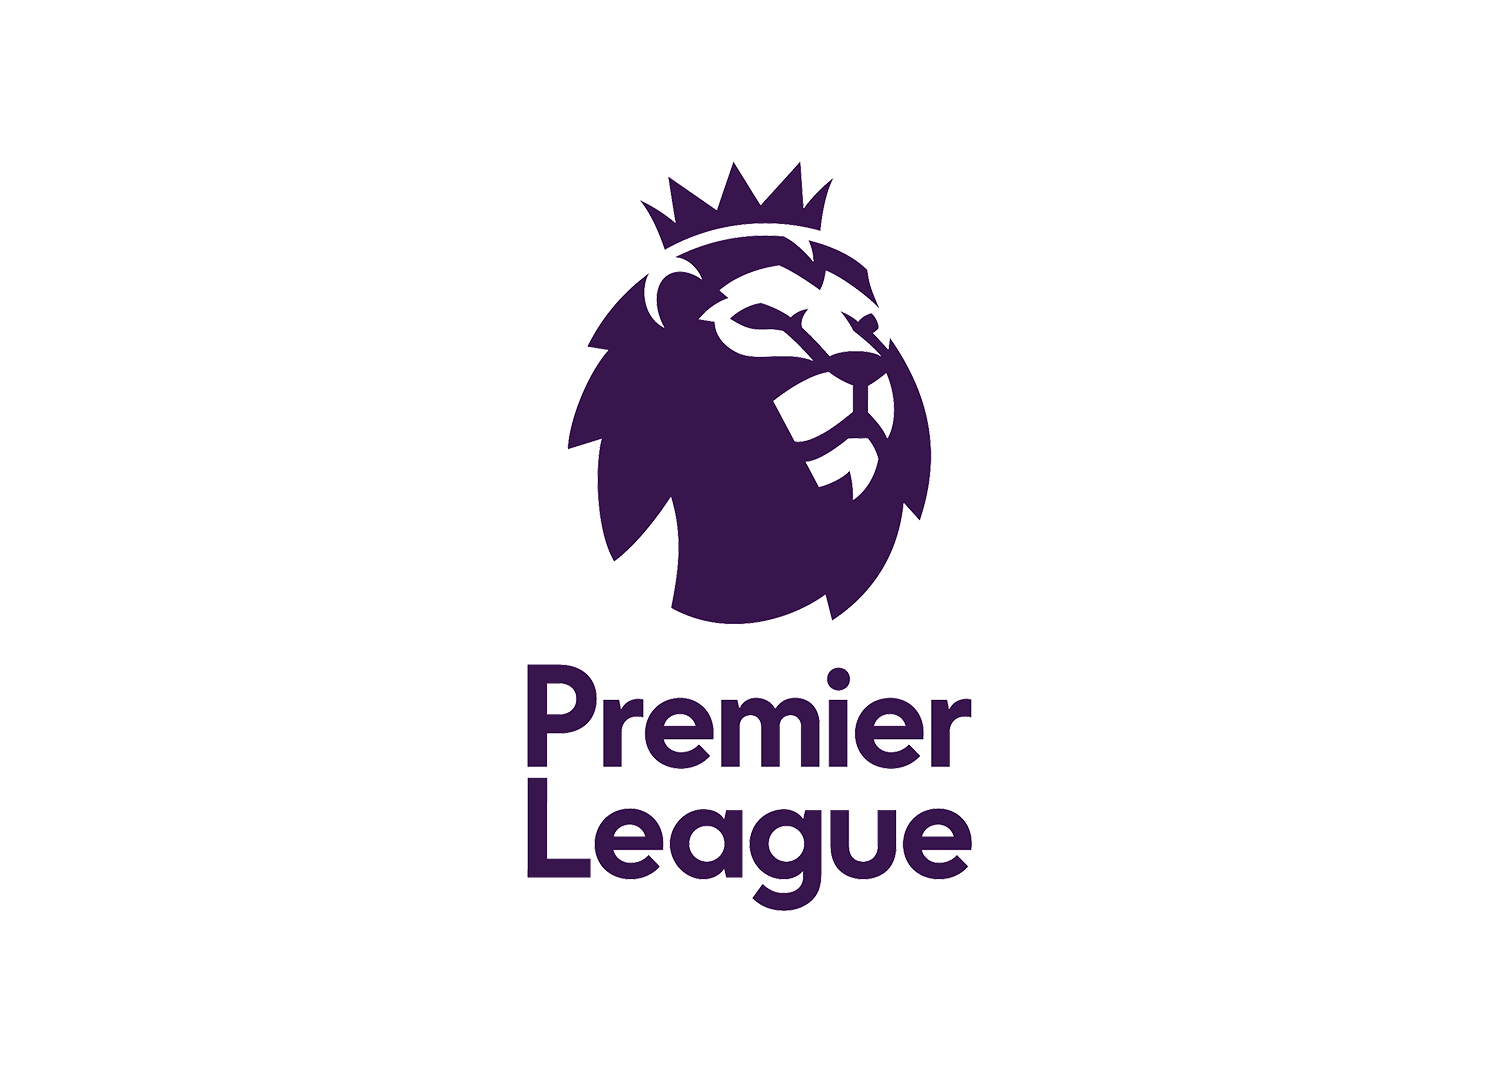 EPL Logo - Premier League Championship Sunday hits high - Sports Media Watch